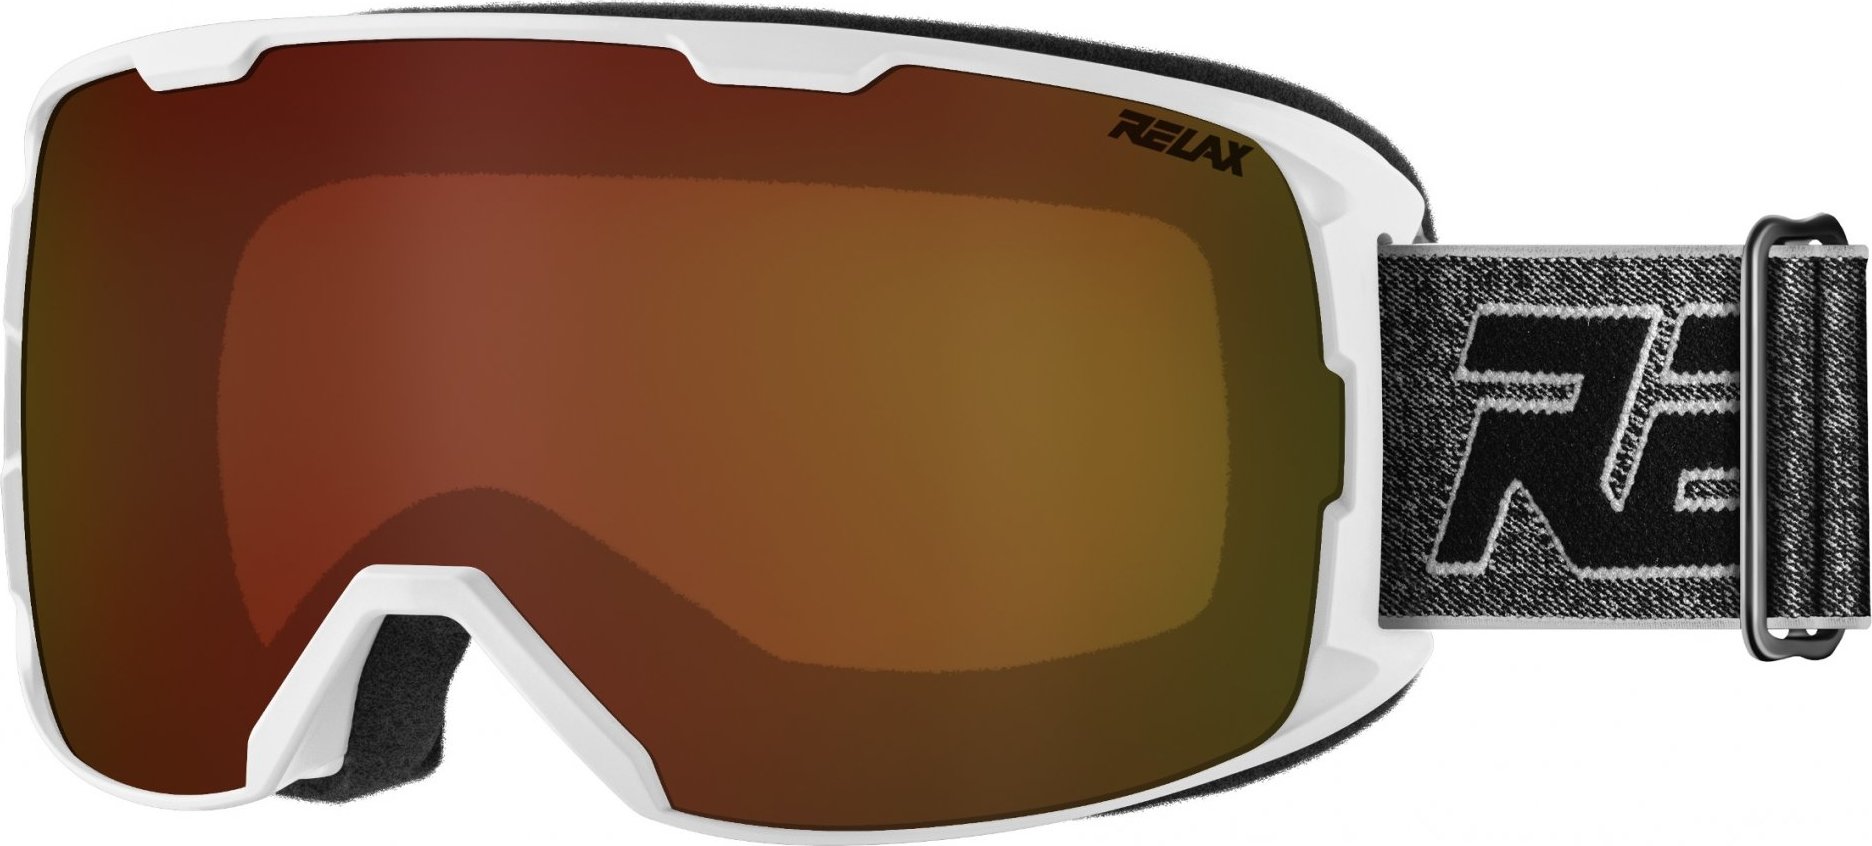 Unisex lyžařské brýle RELAX Ace bílé